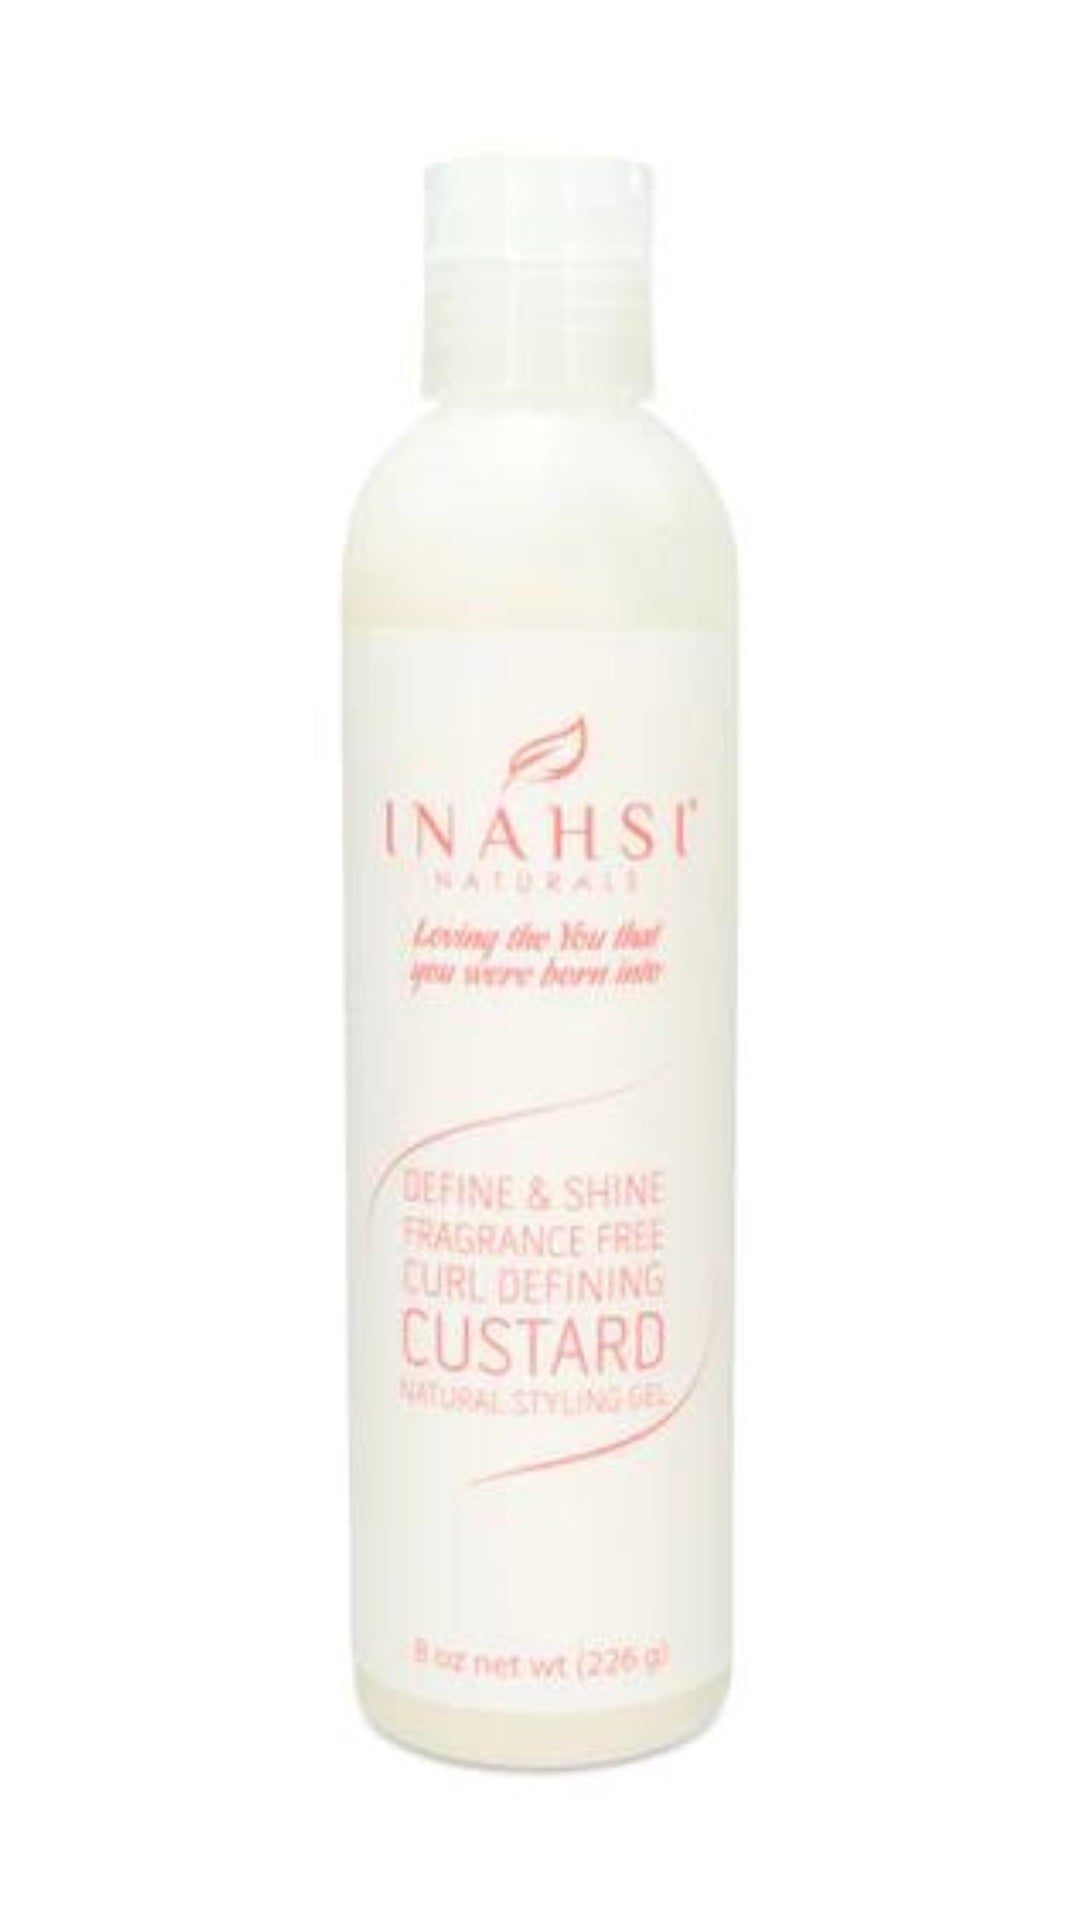 INAHSI - Define & Shine Fragrance Free Curl Defining Custard Natural Styling Gel